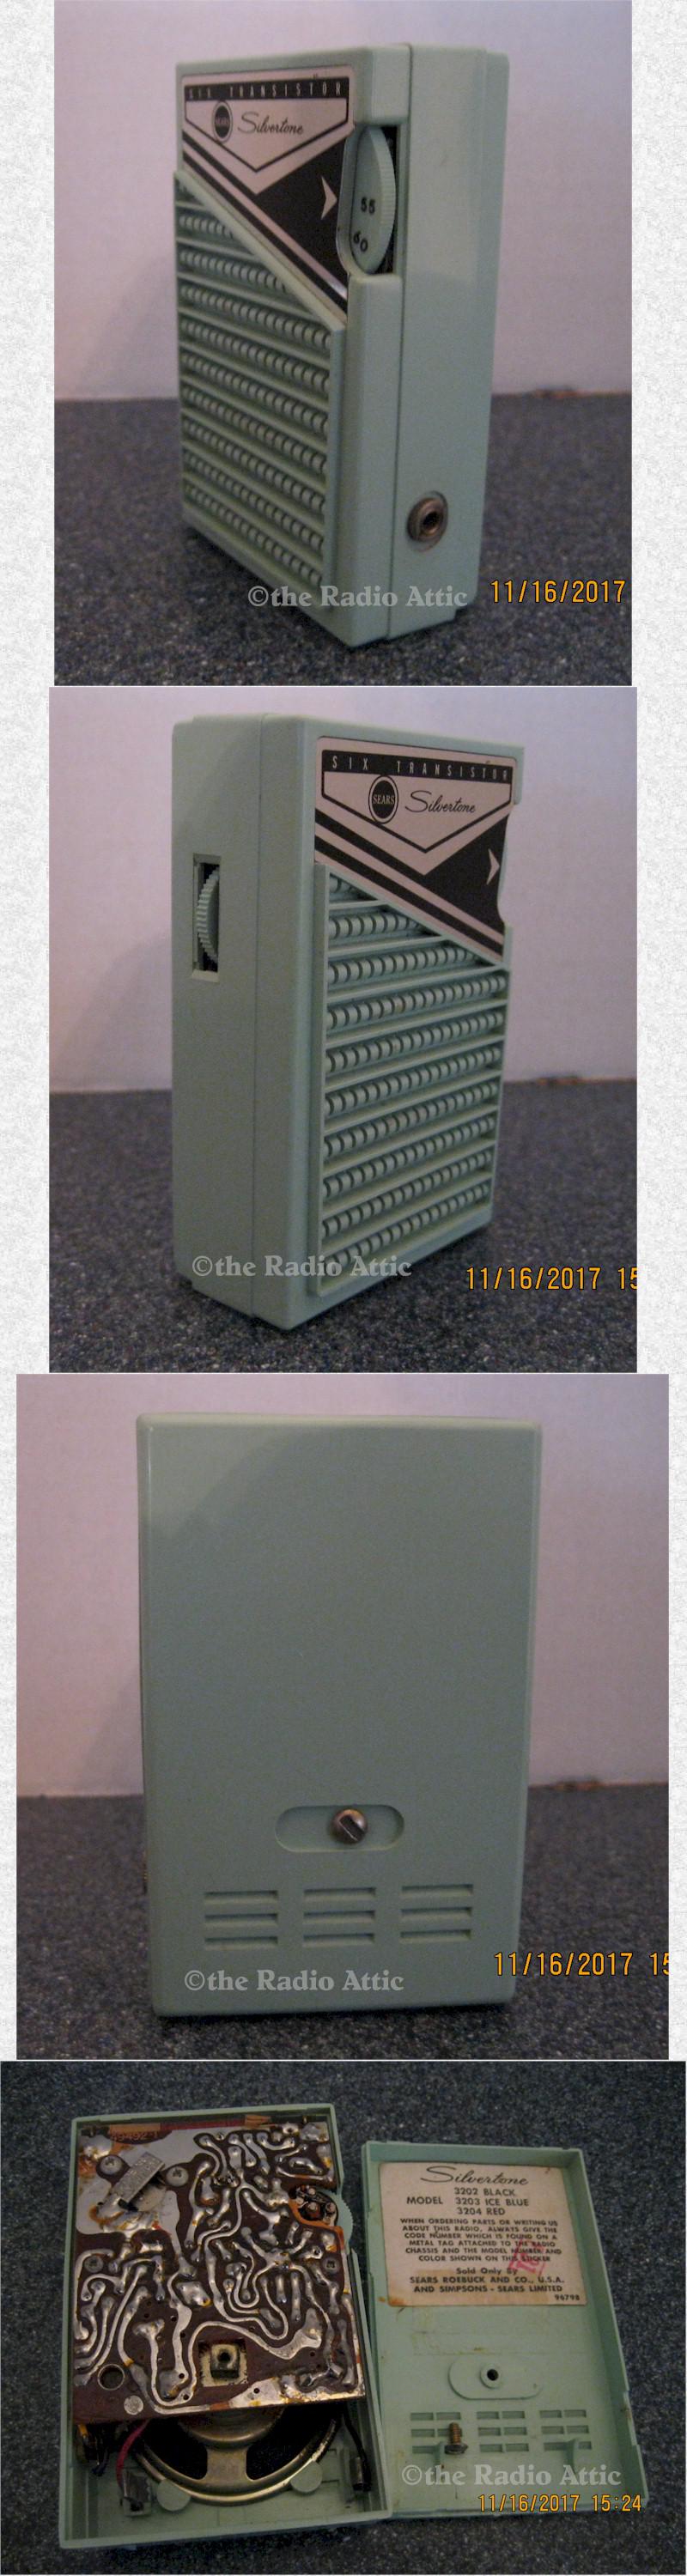 Silvertone 3203 Transistor (1960s)